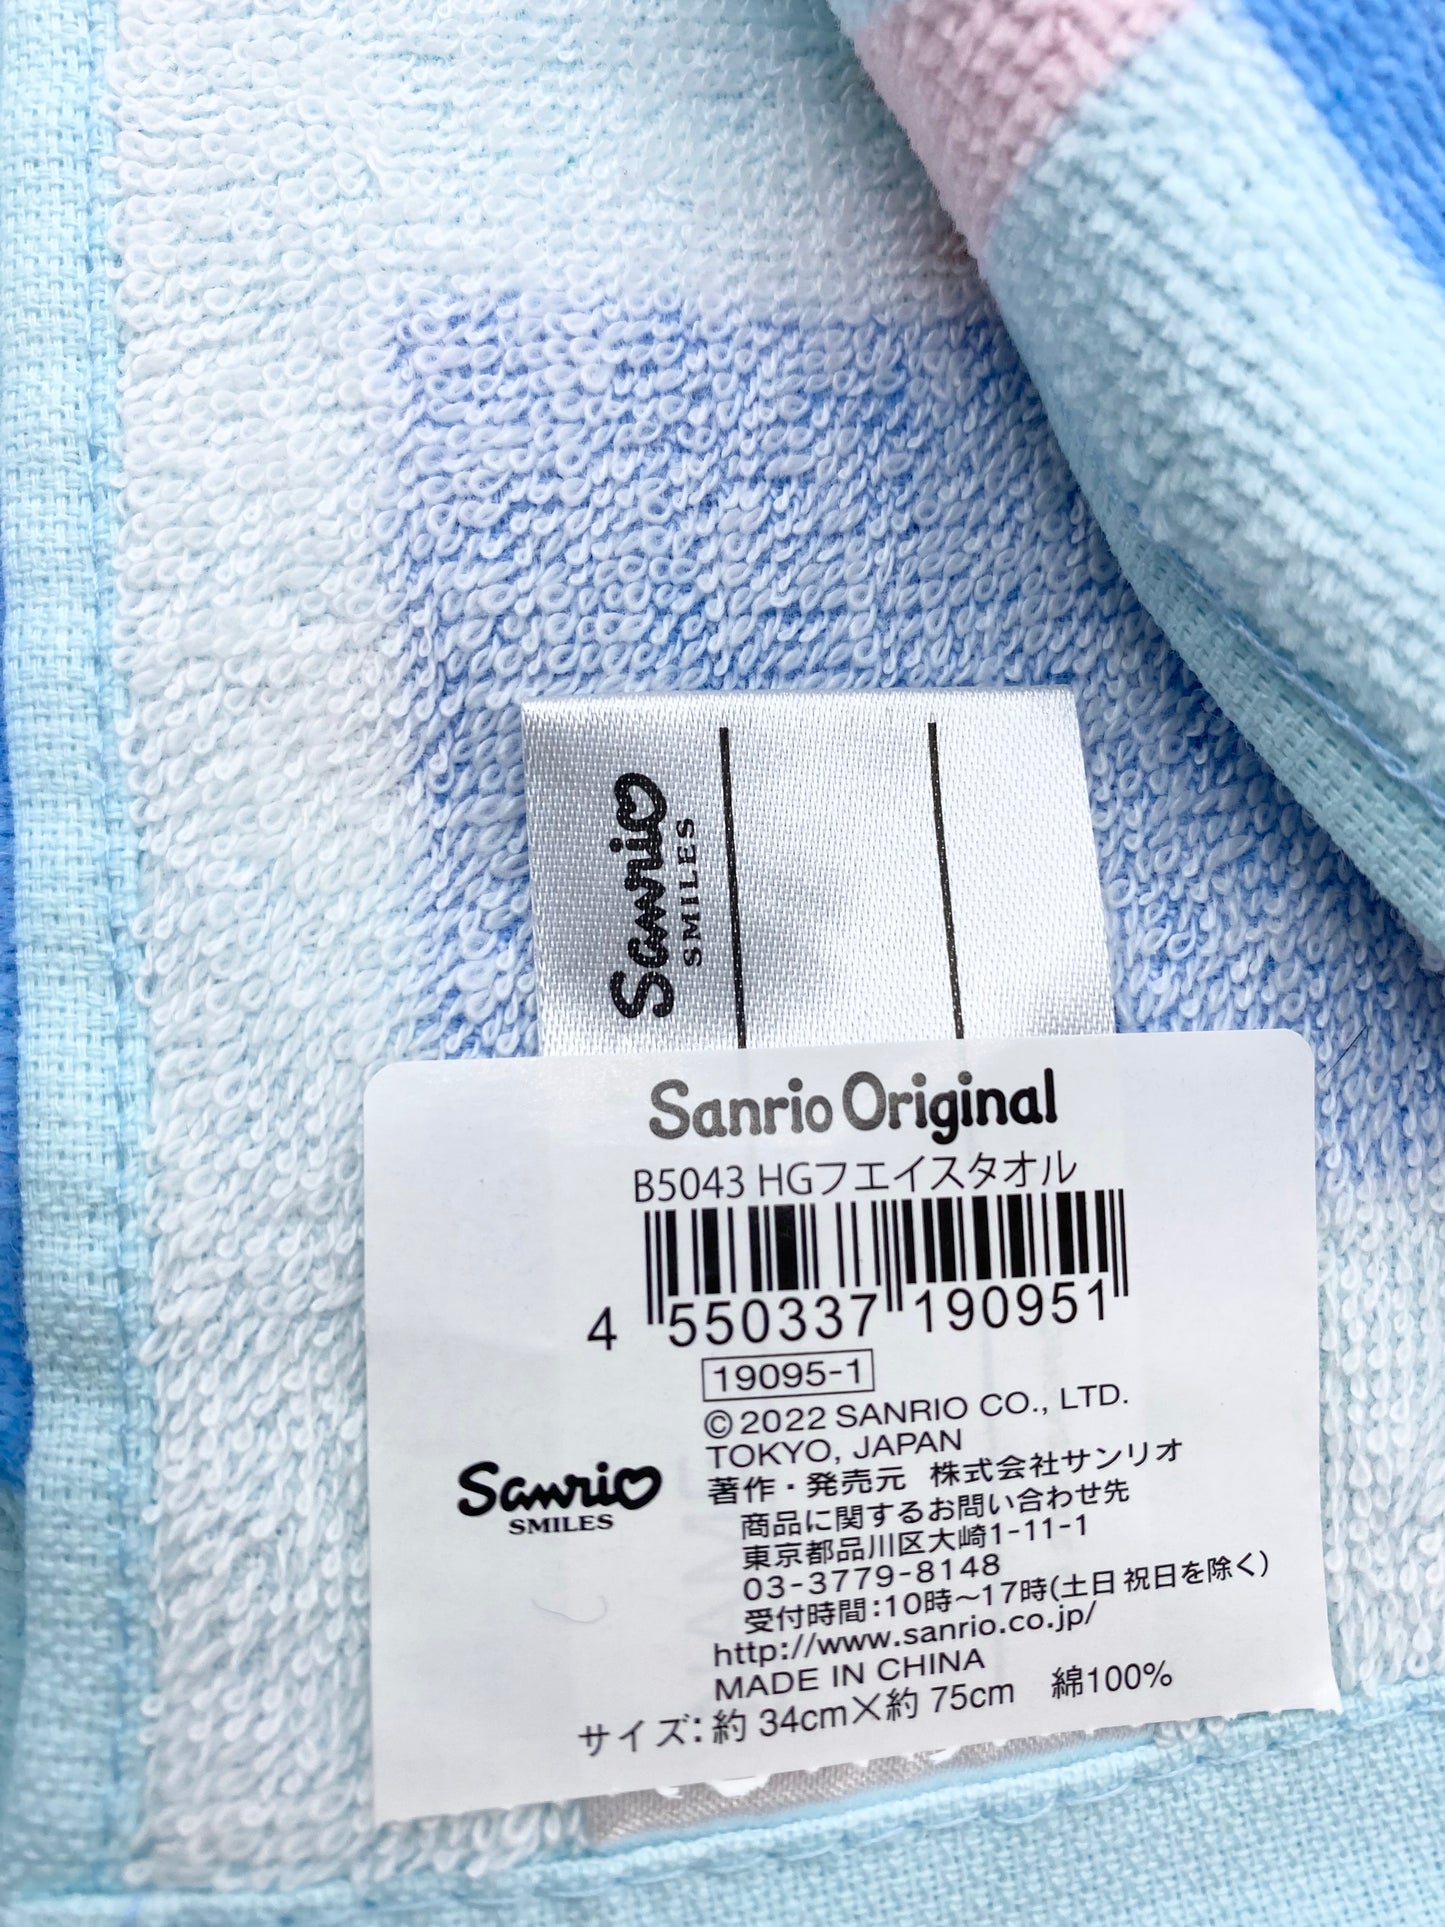 Sanrio Smiles Hangyodon Character Flannel / Face Cloth